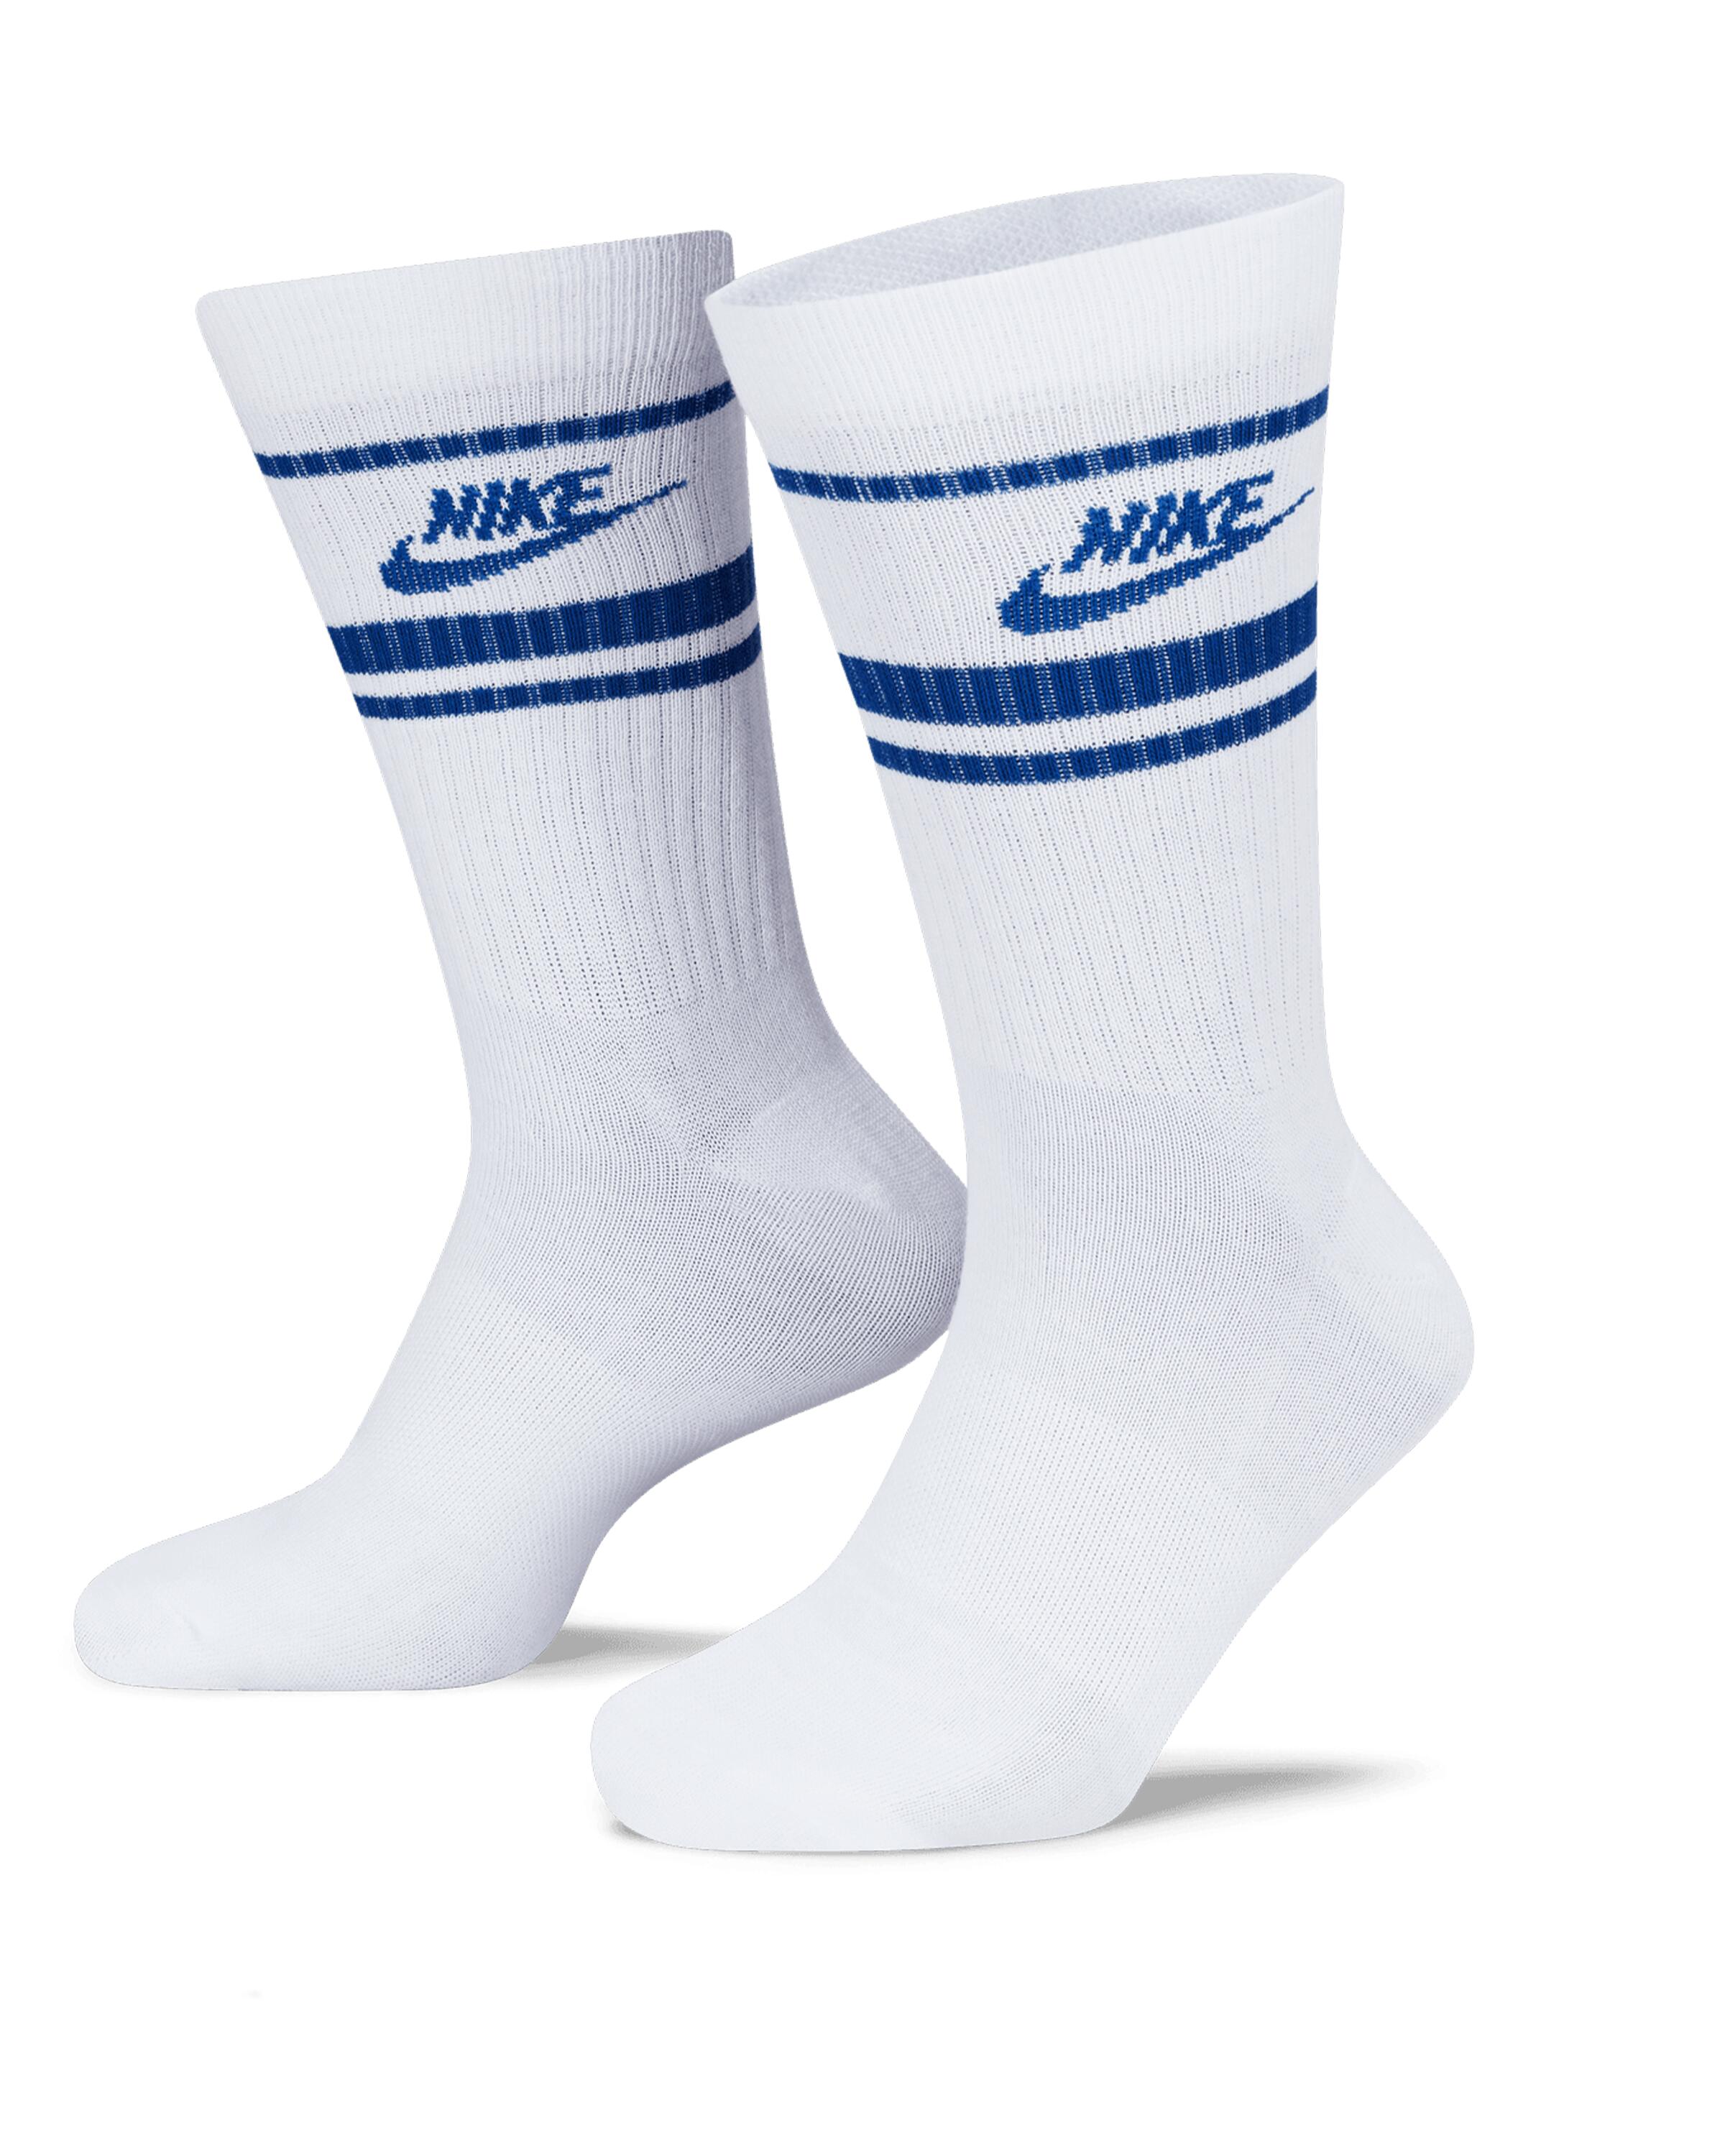 nike everyday essential crew socks